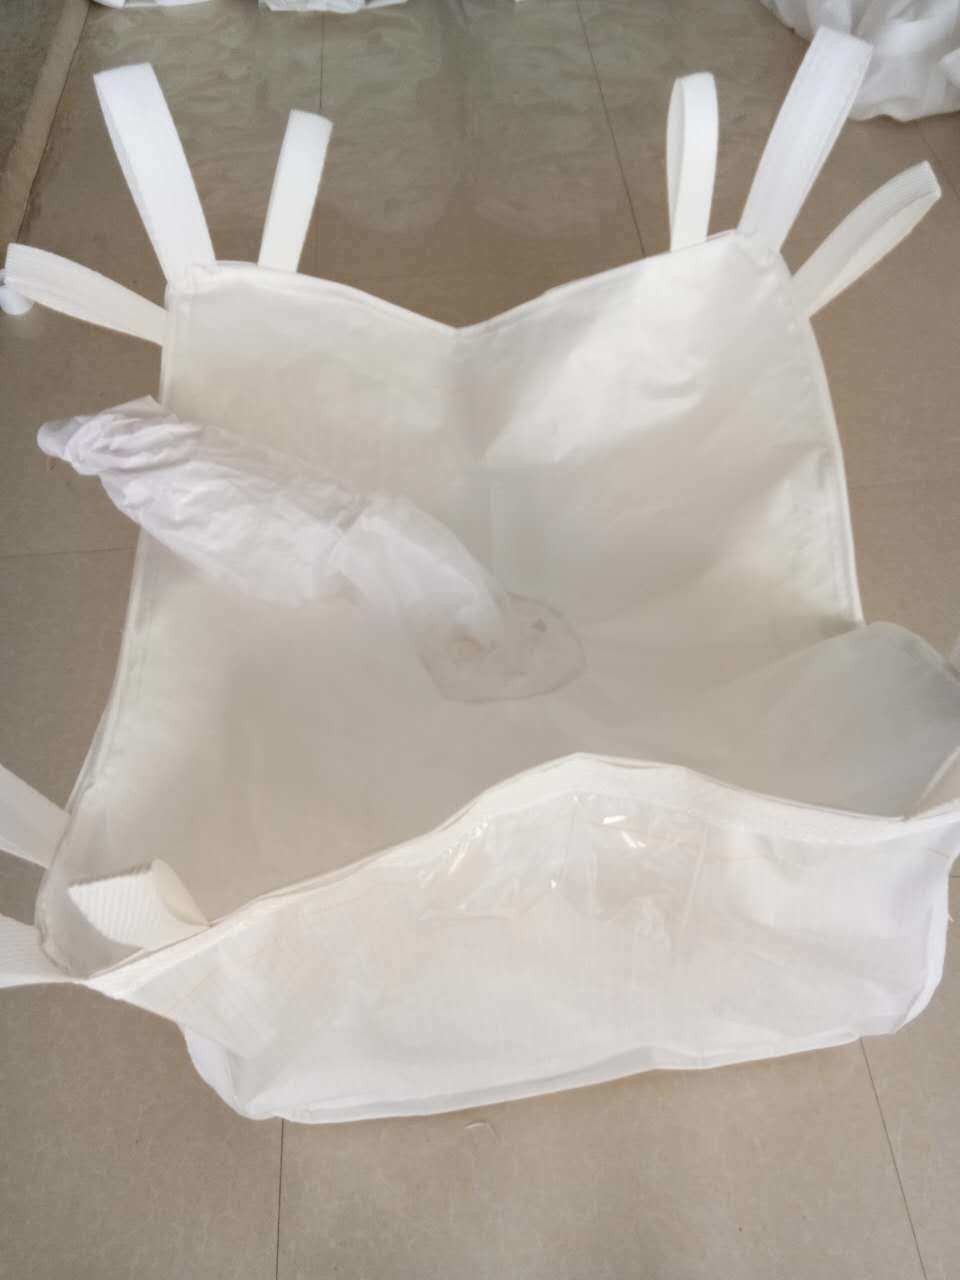 Big Capacity Industrial Use Wear Resistant Plastic Bag Wove Bags